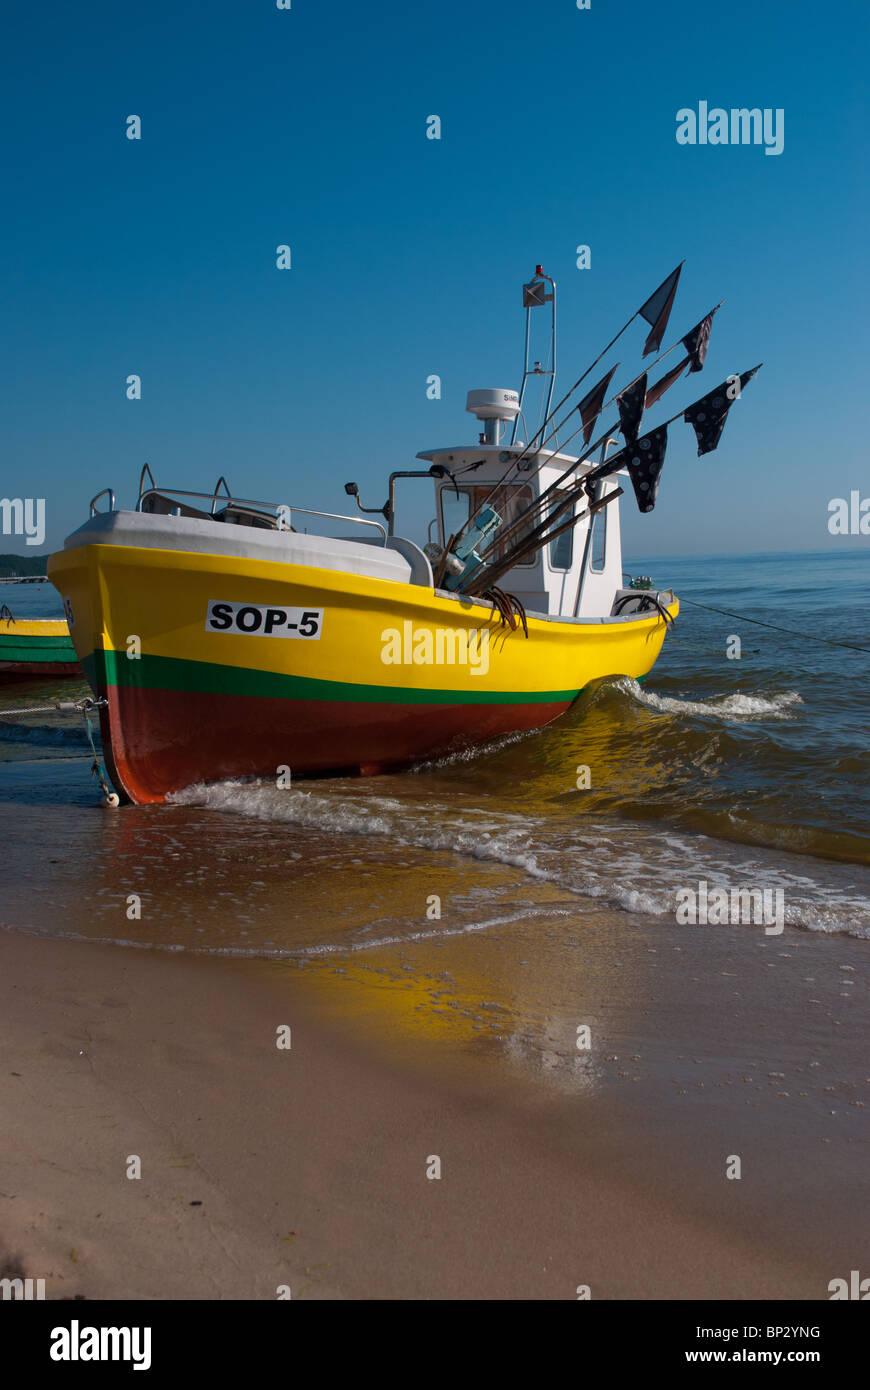 Fishing boat at the beach in Sopot, Poland. Stock Photo